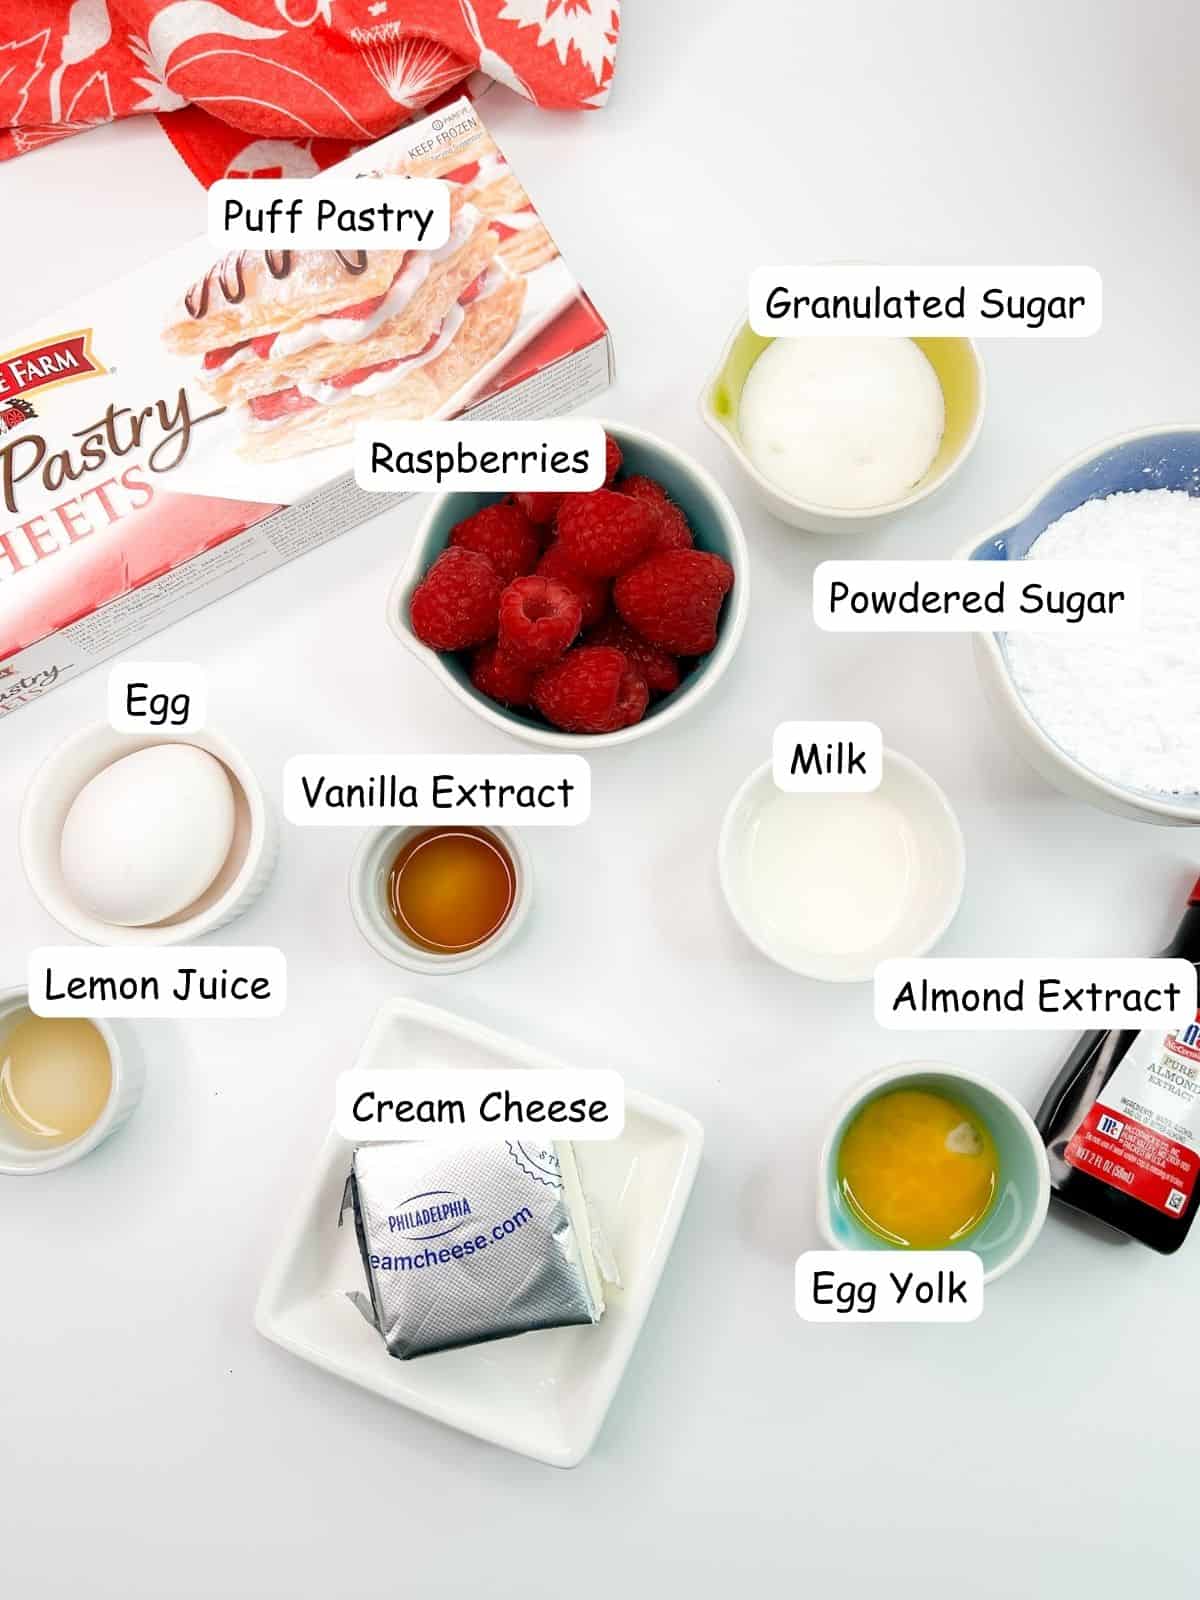 ingredients for homemade danish recipe made with cream cheese and fresh raspberries.